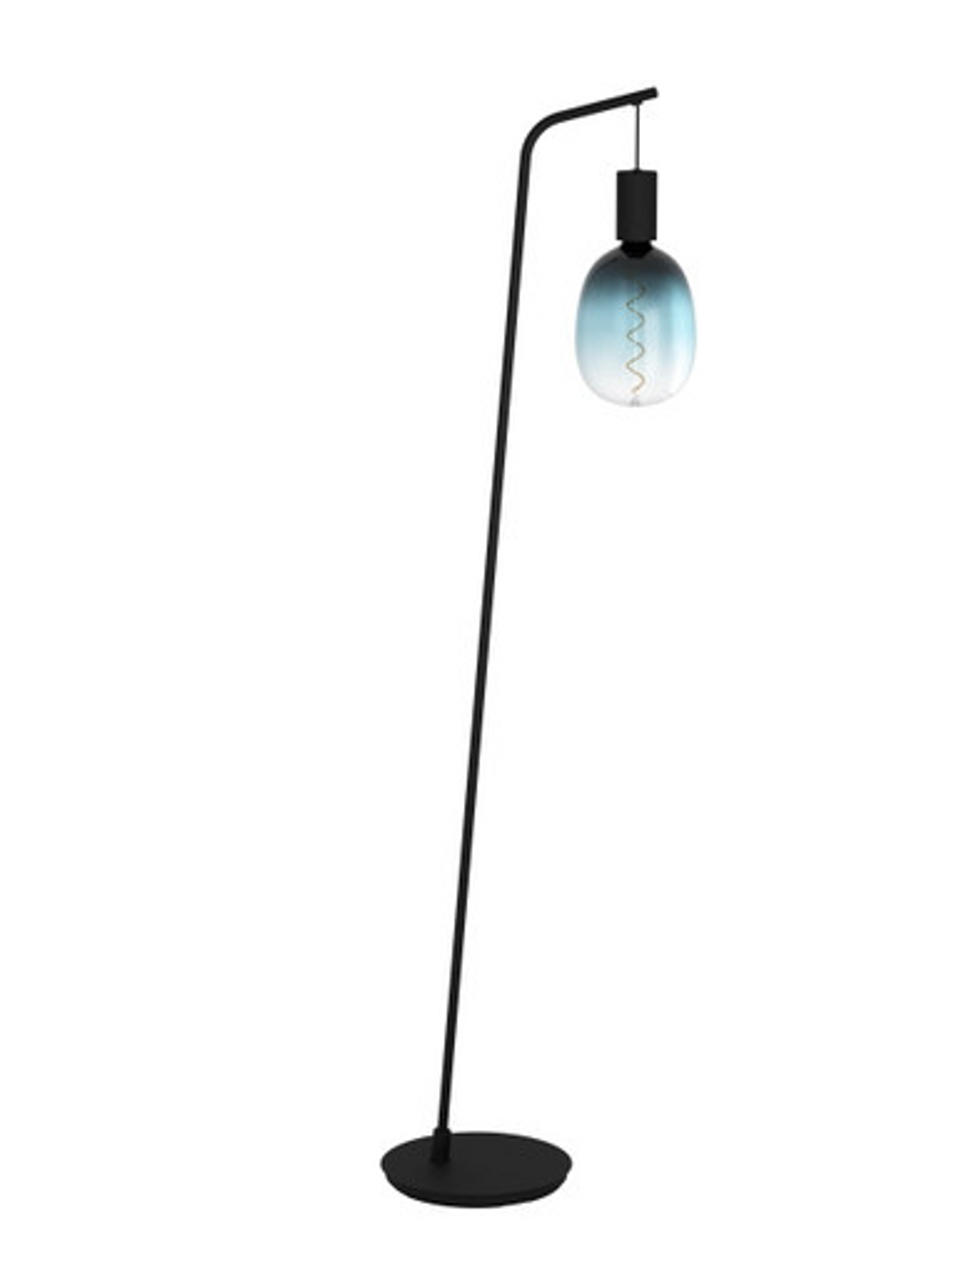 Black floor lamp with slight lean